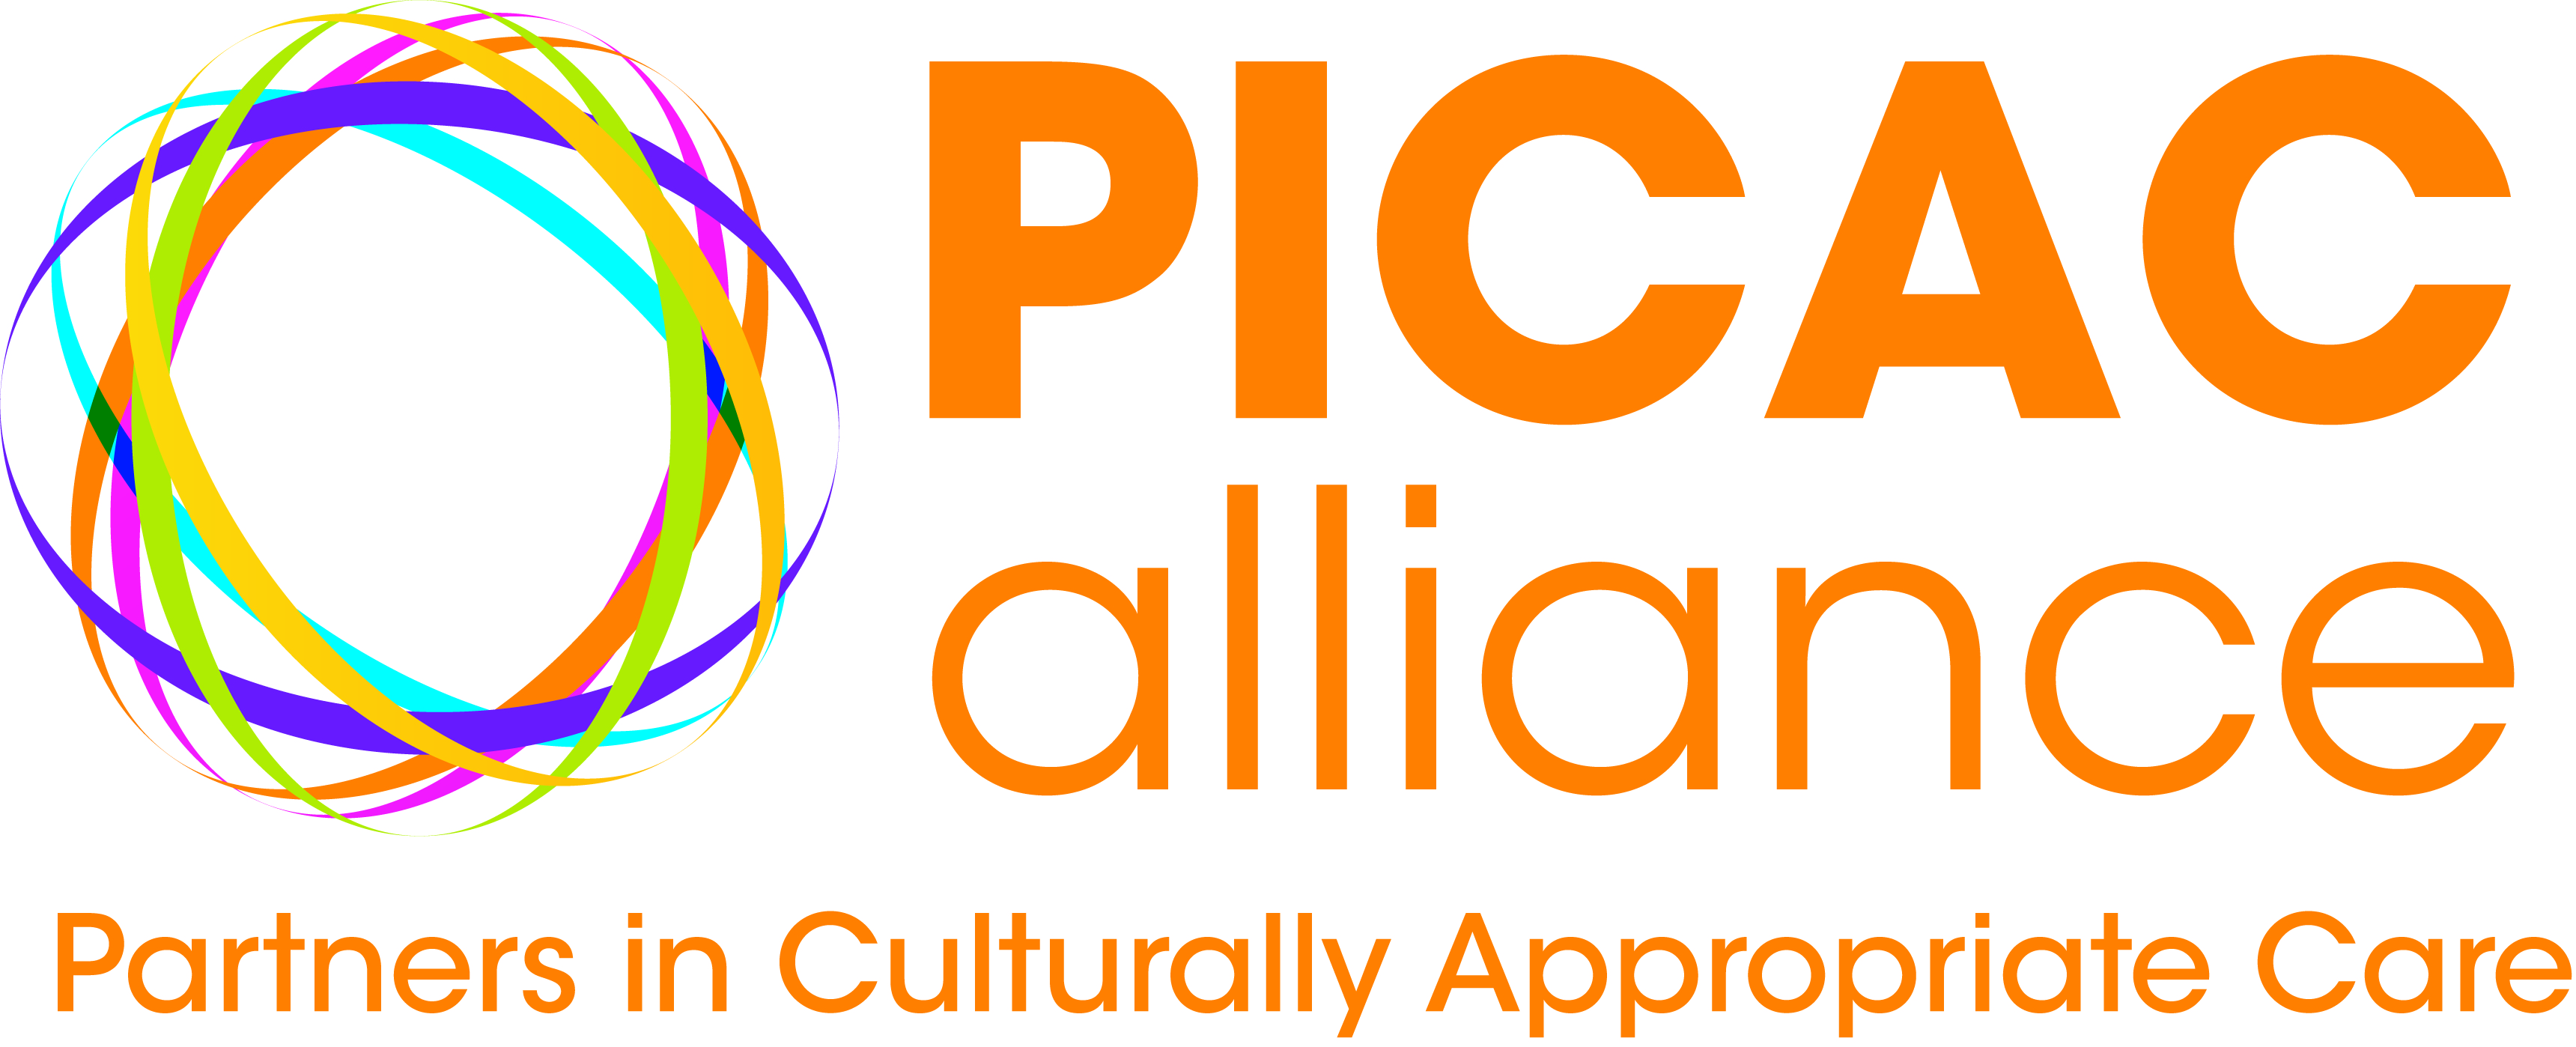 PICAC Alliance logo